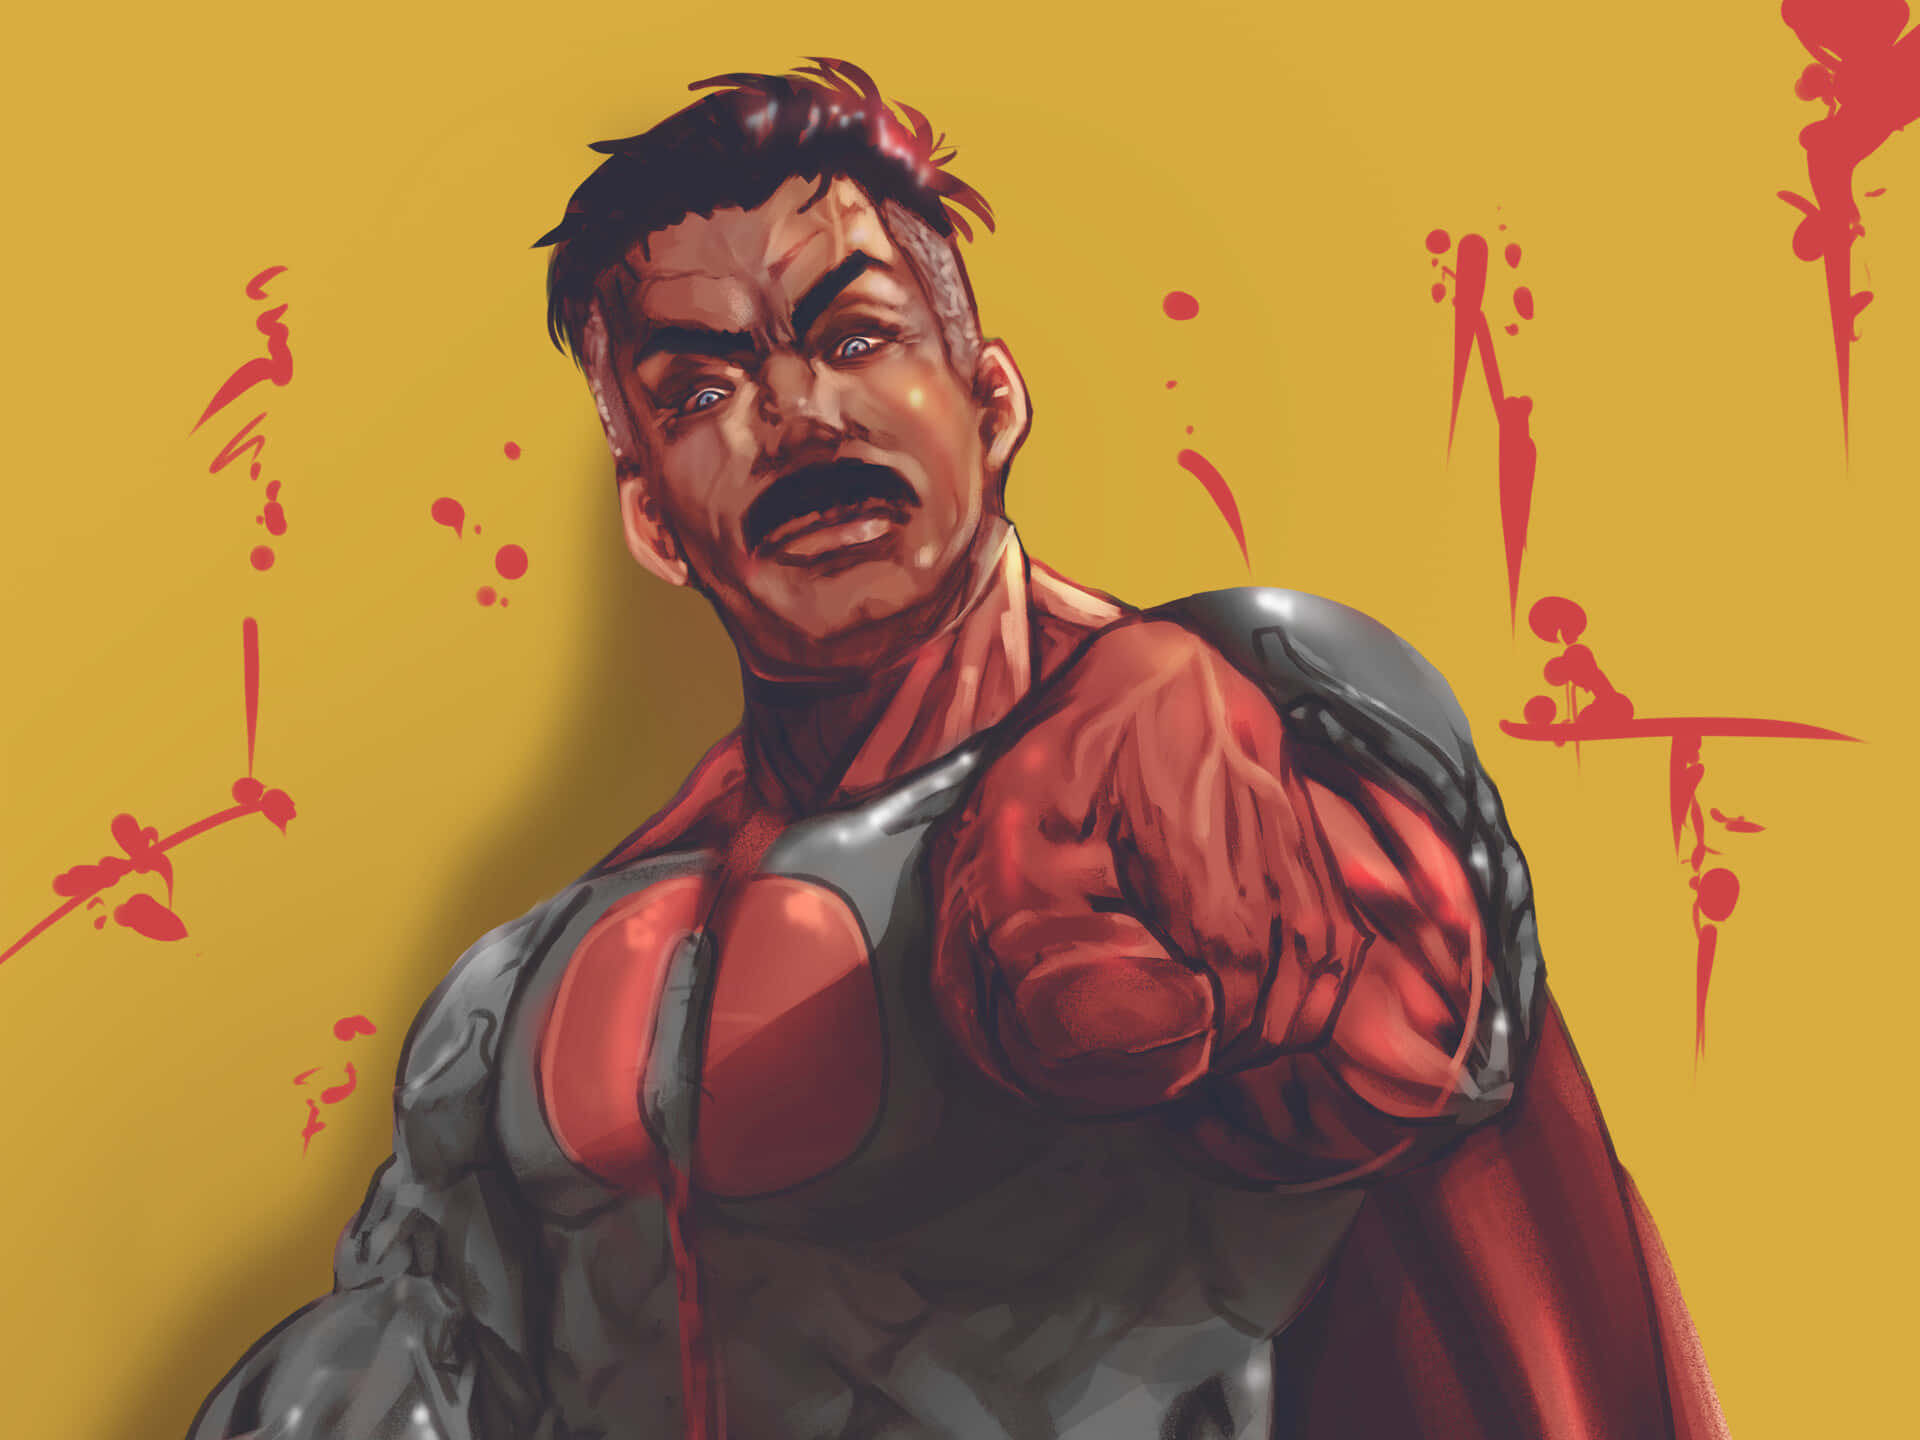 Meet Omni Man - a powerful superhero ready to save the world! Wallpaper